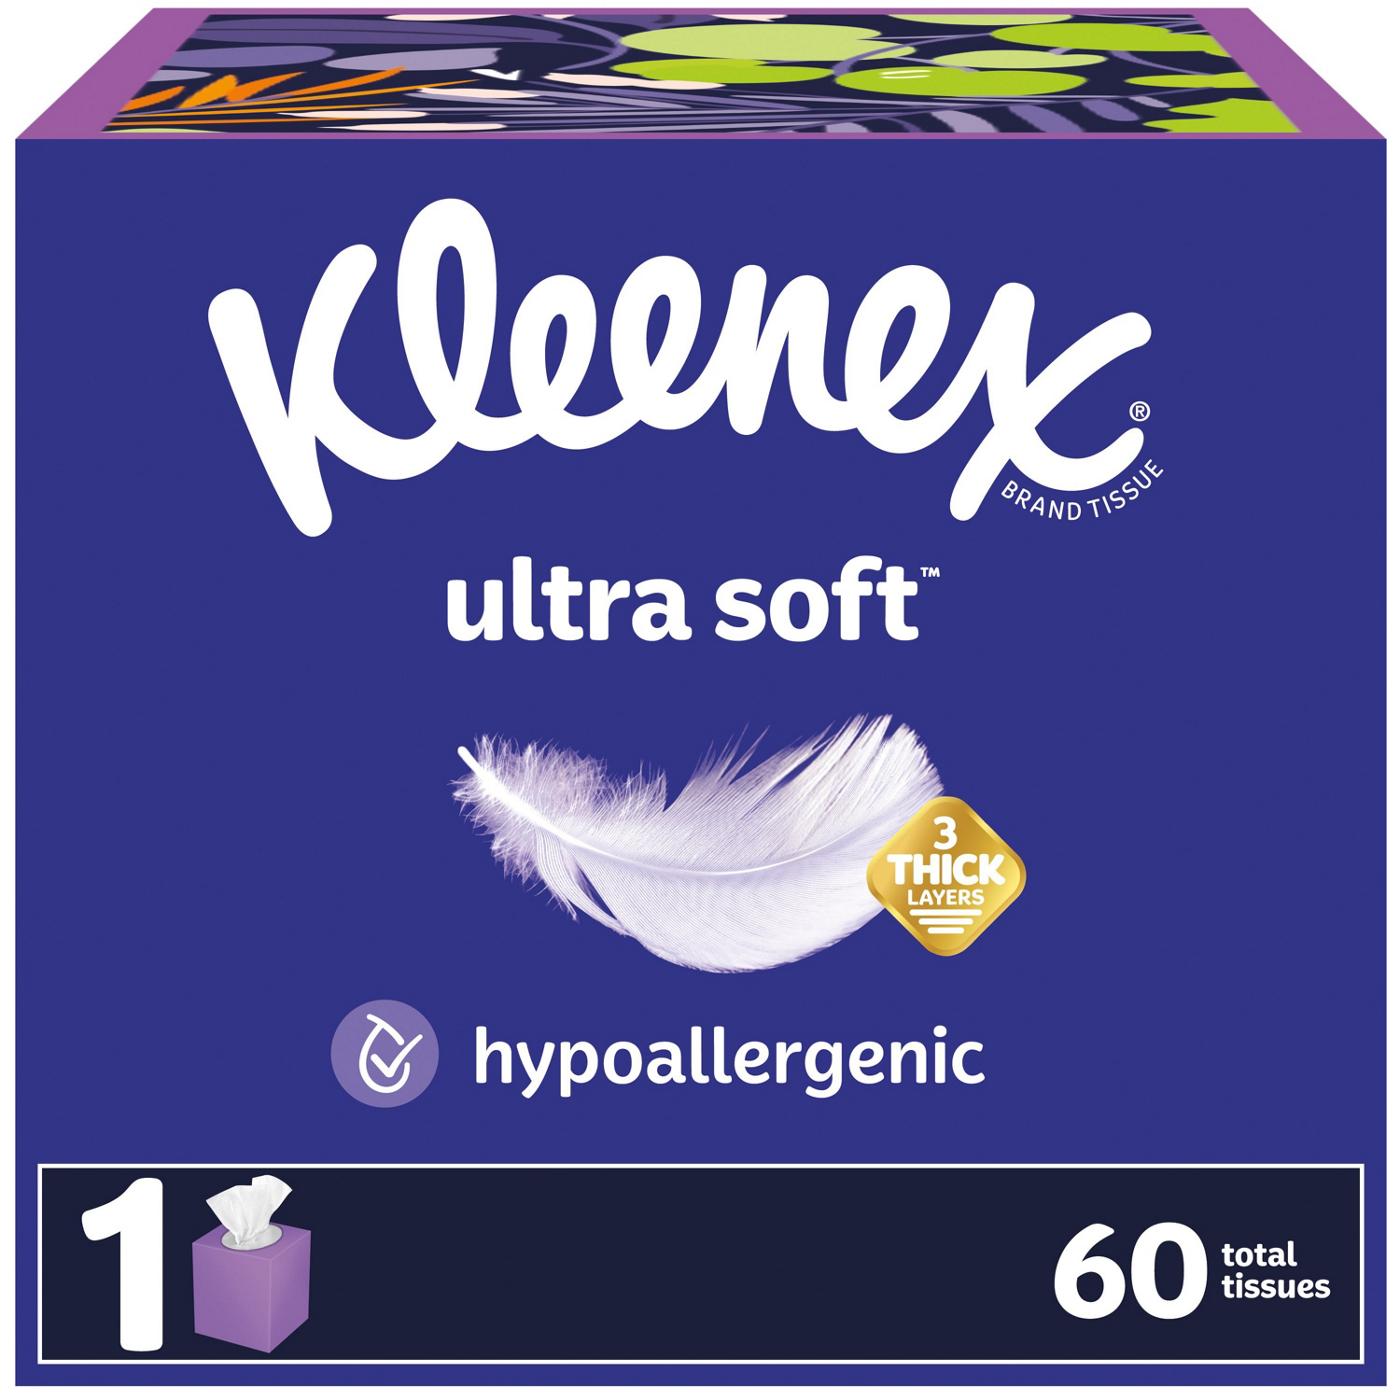 Kleenex Ultra Soft Ultra Soft Facial Tissues; image 1 of 8